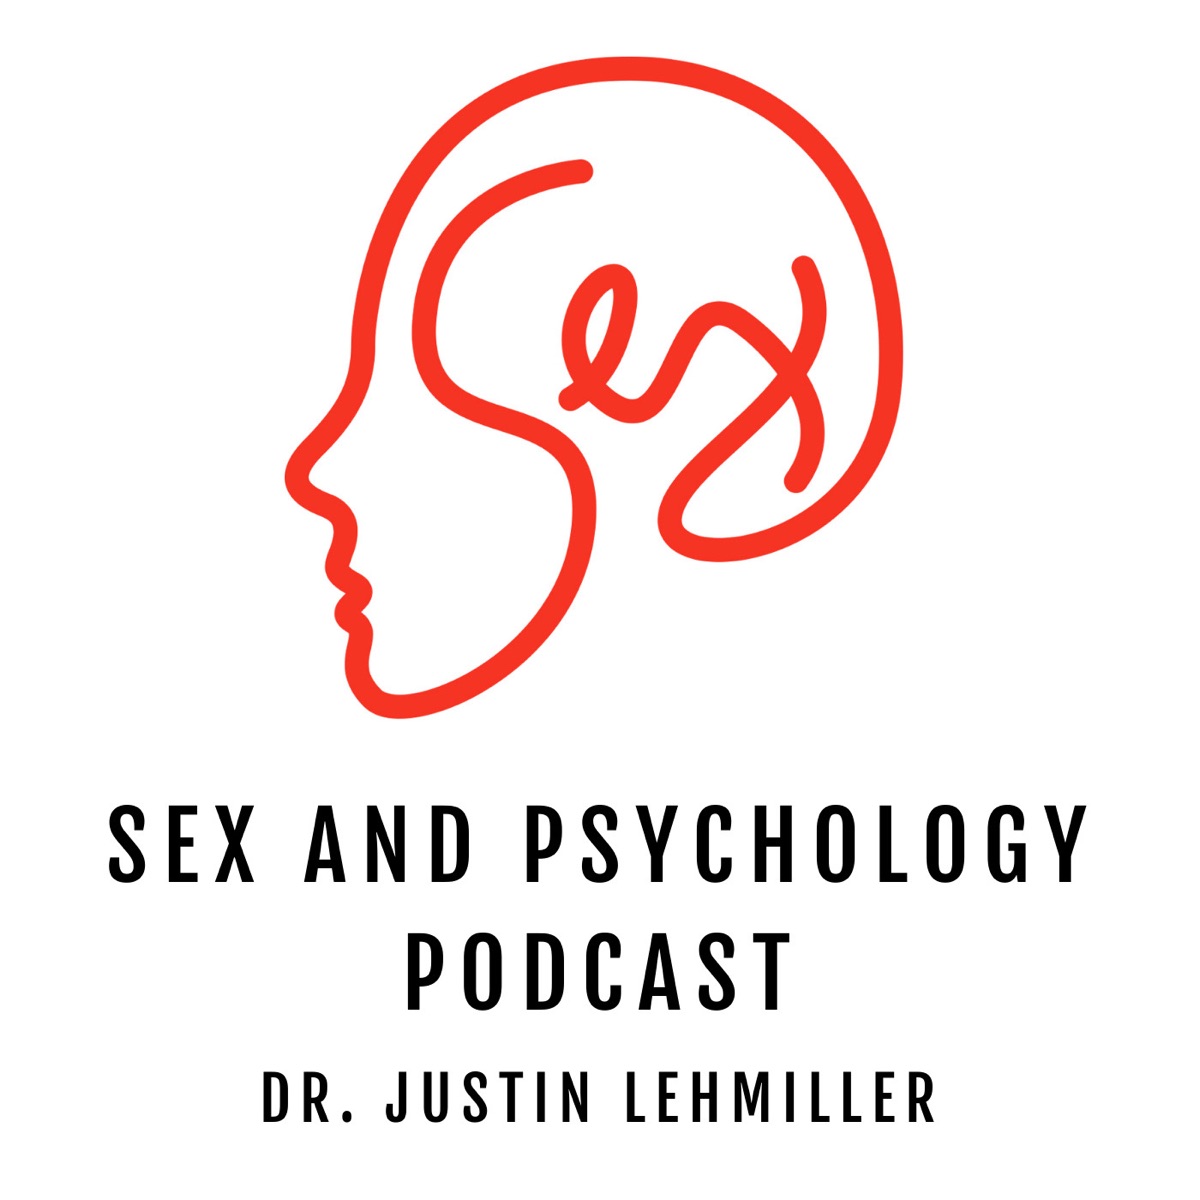 Sex and Psychology Podcast – Podcast image